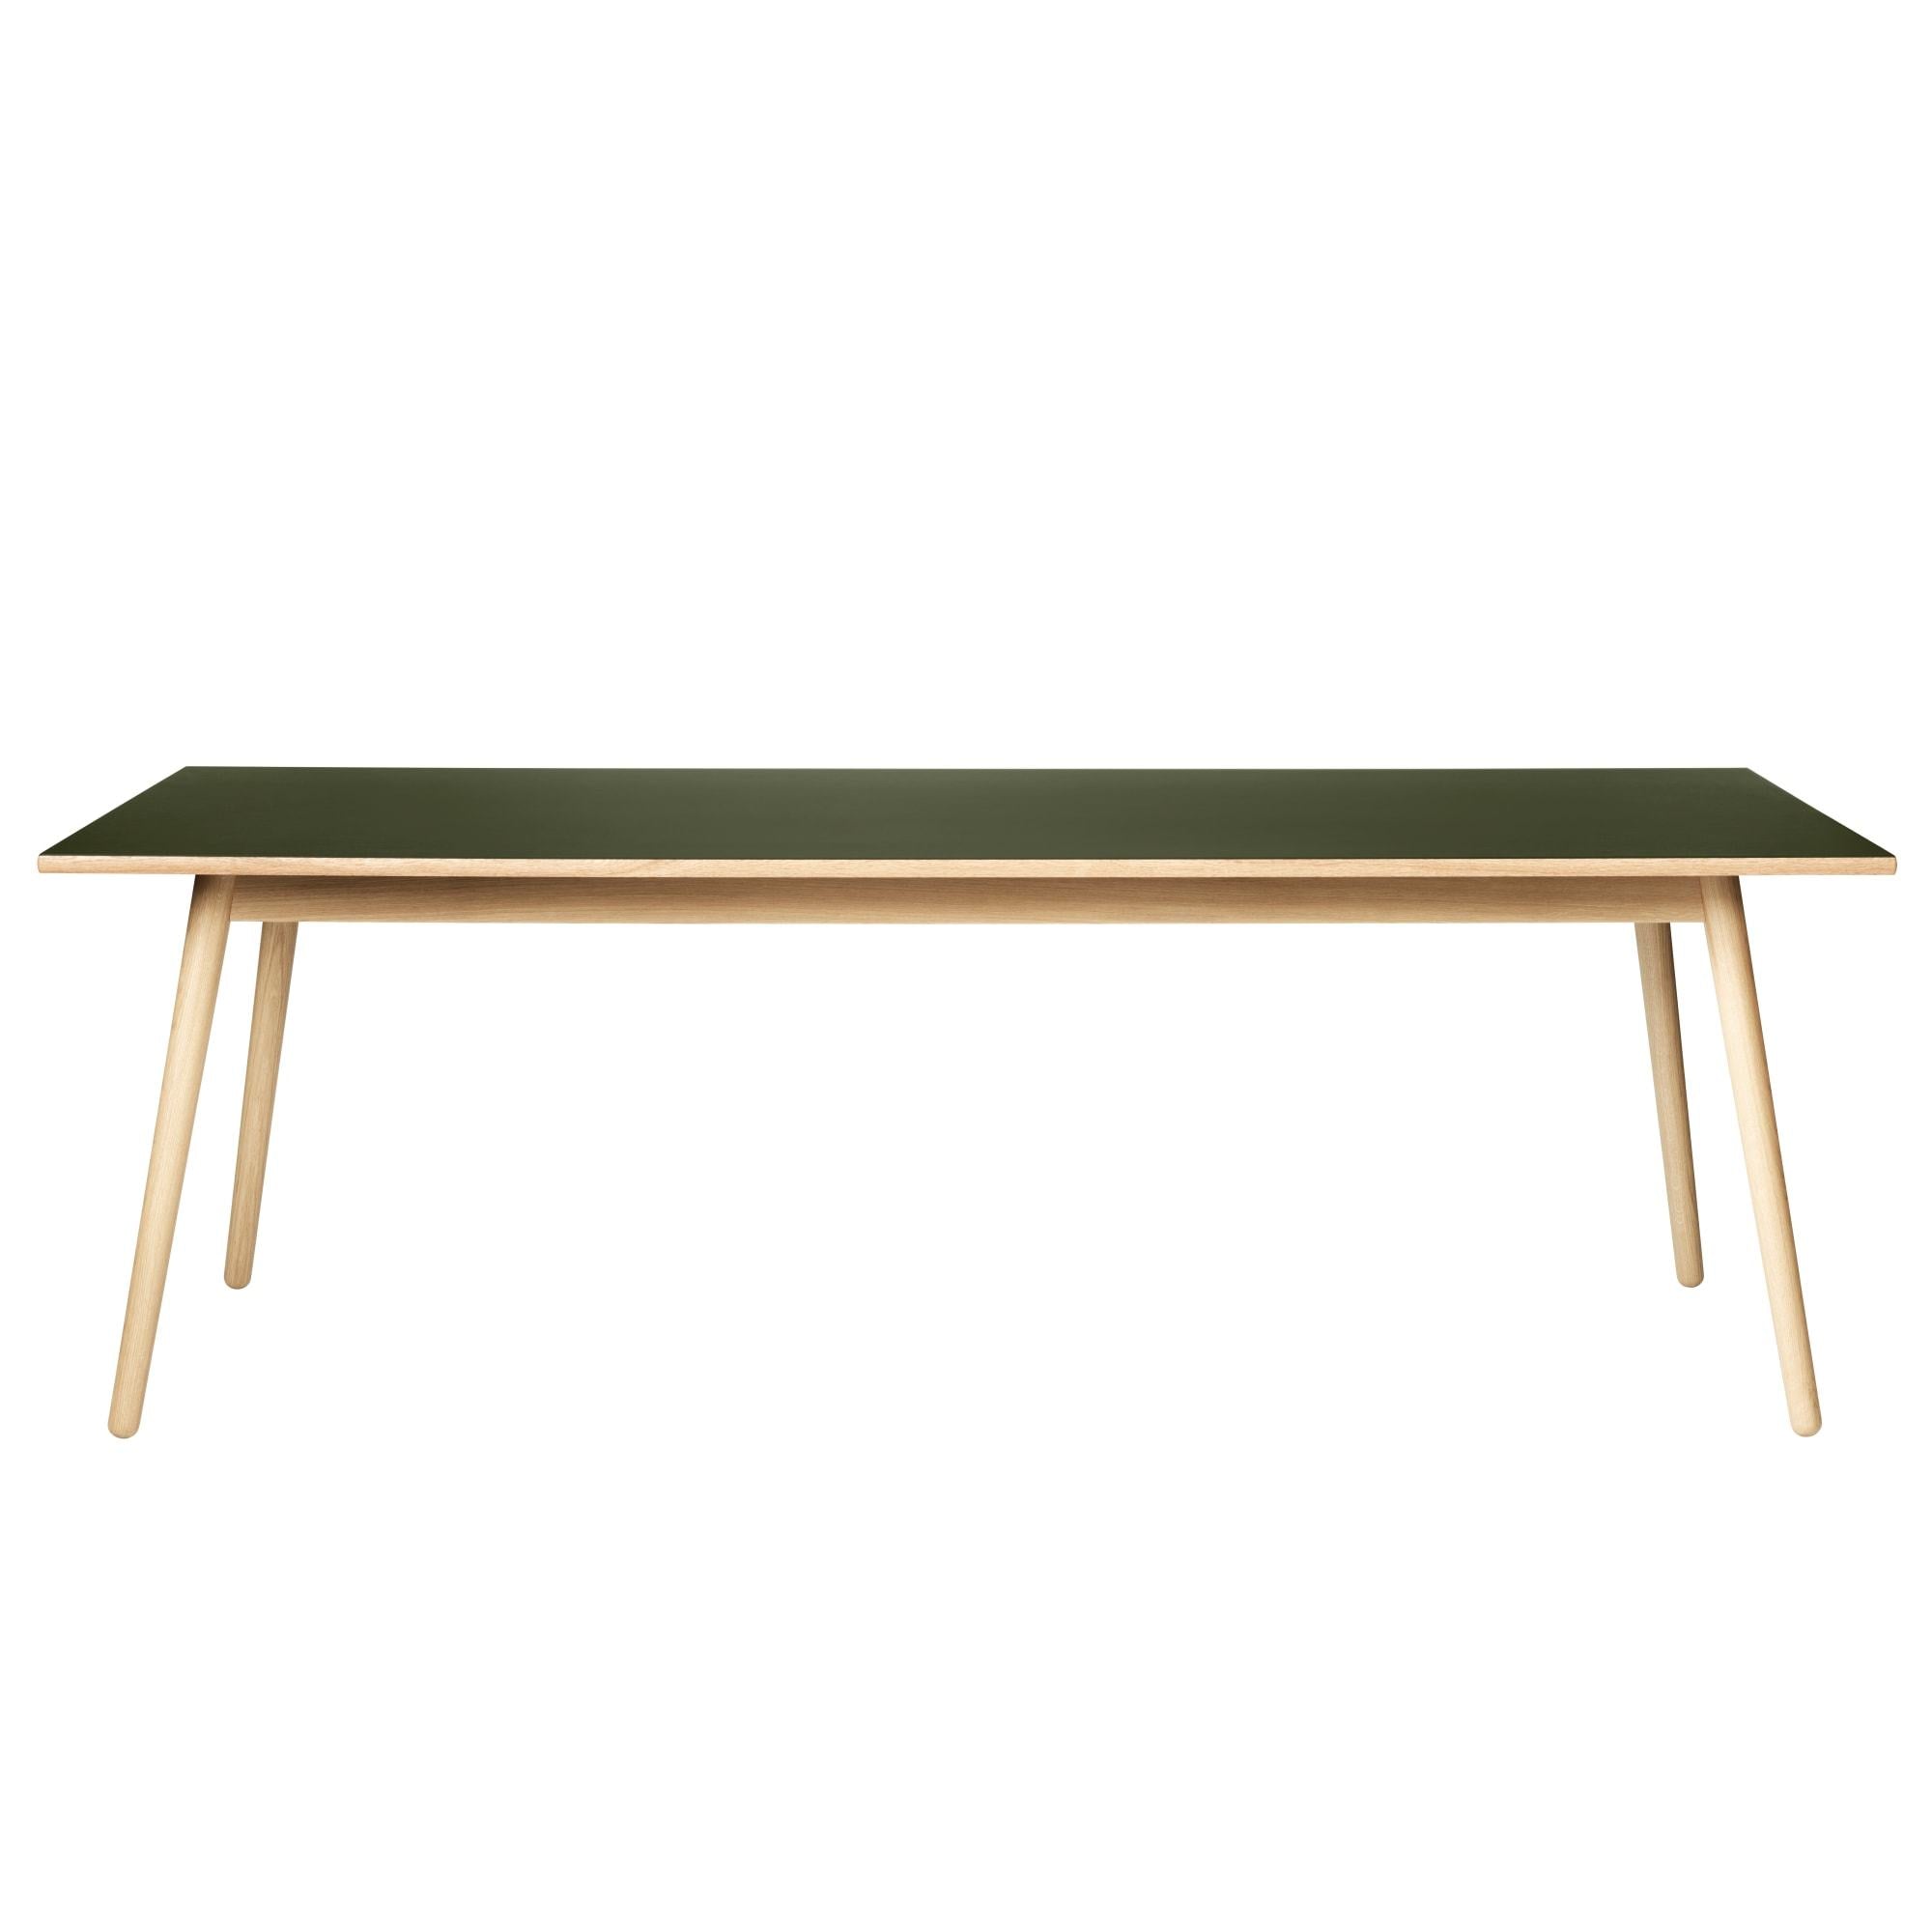 FDB Møbler C35C matbord ek/oliv linoleum, 95x220 cm